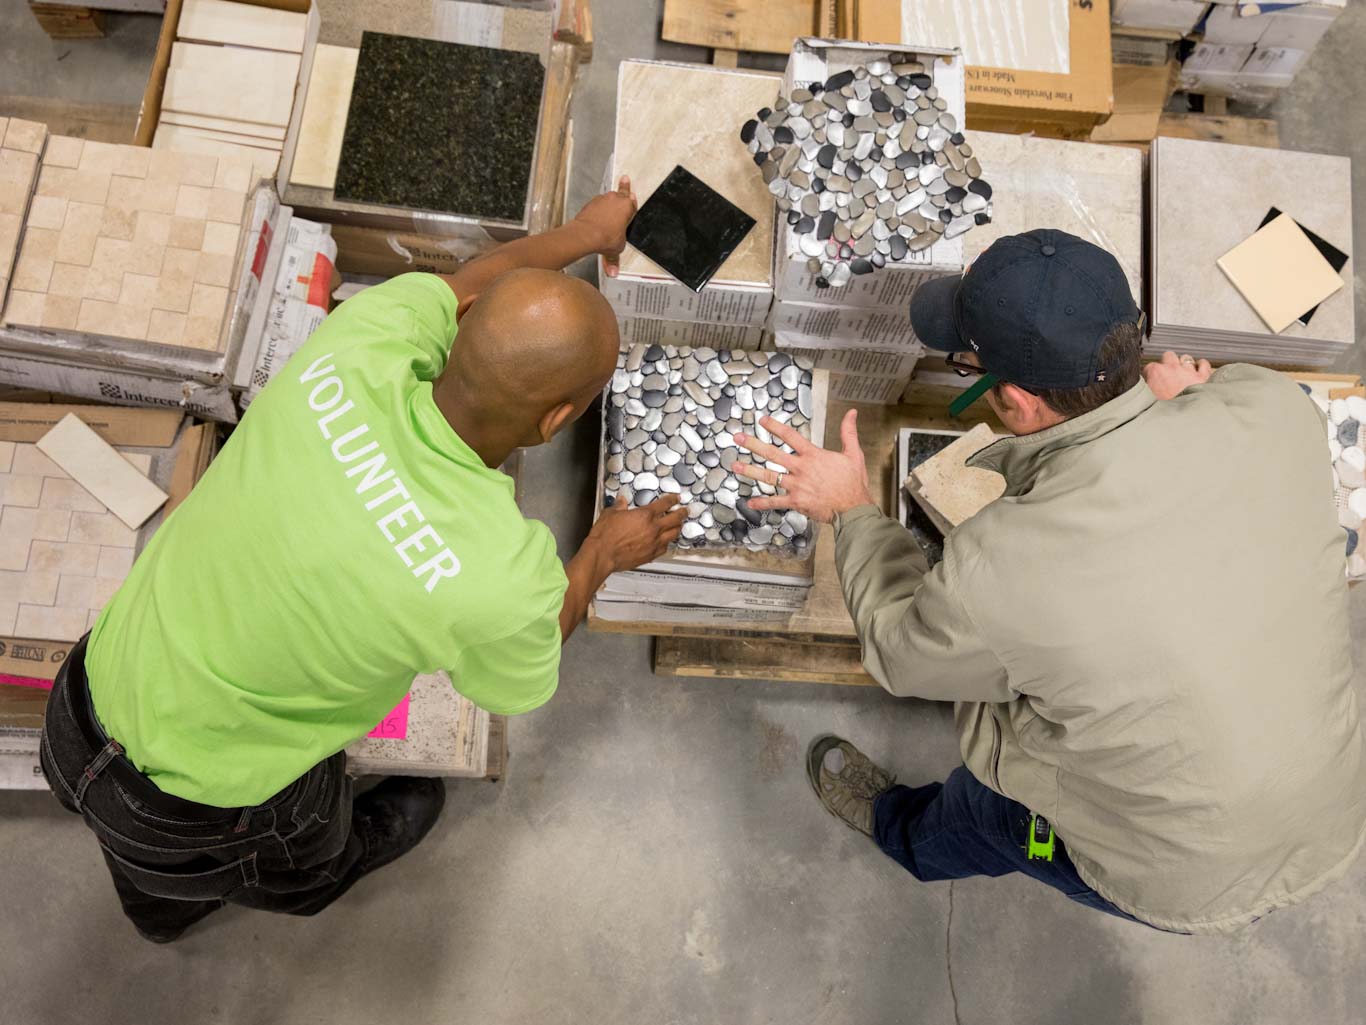 Volunteer in green "Volunteer" shirt assisting a customer with tile